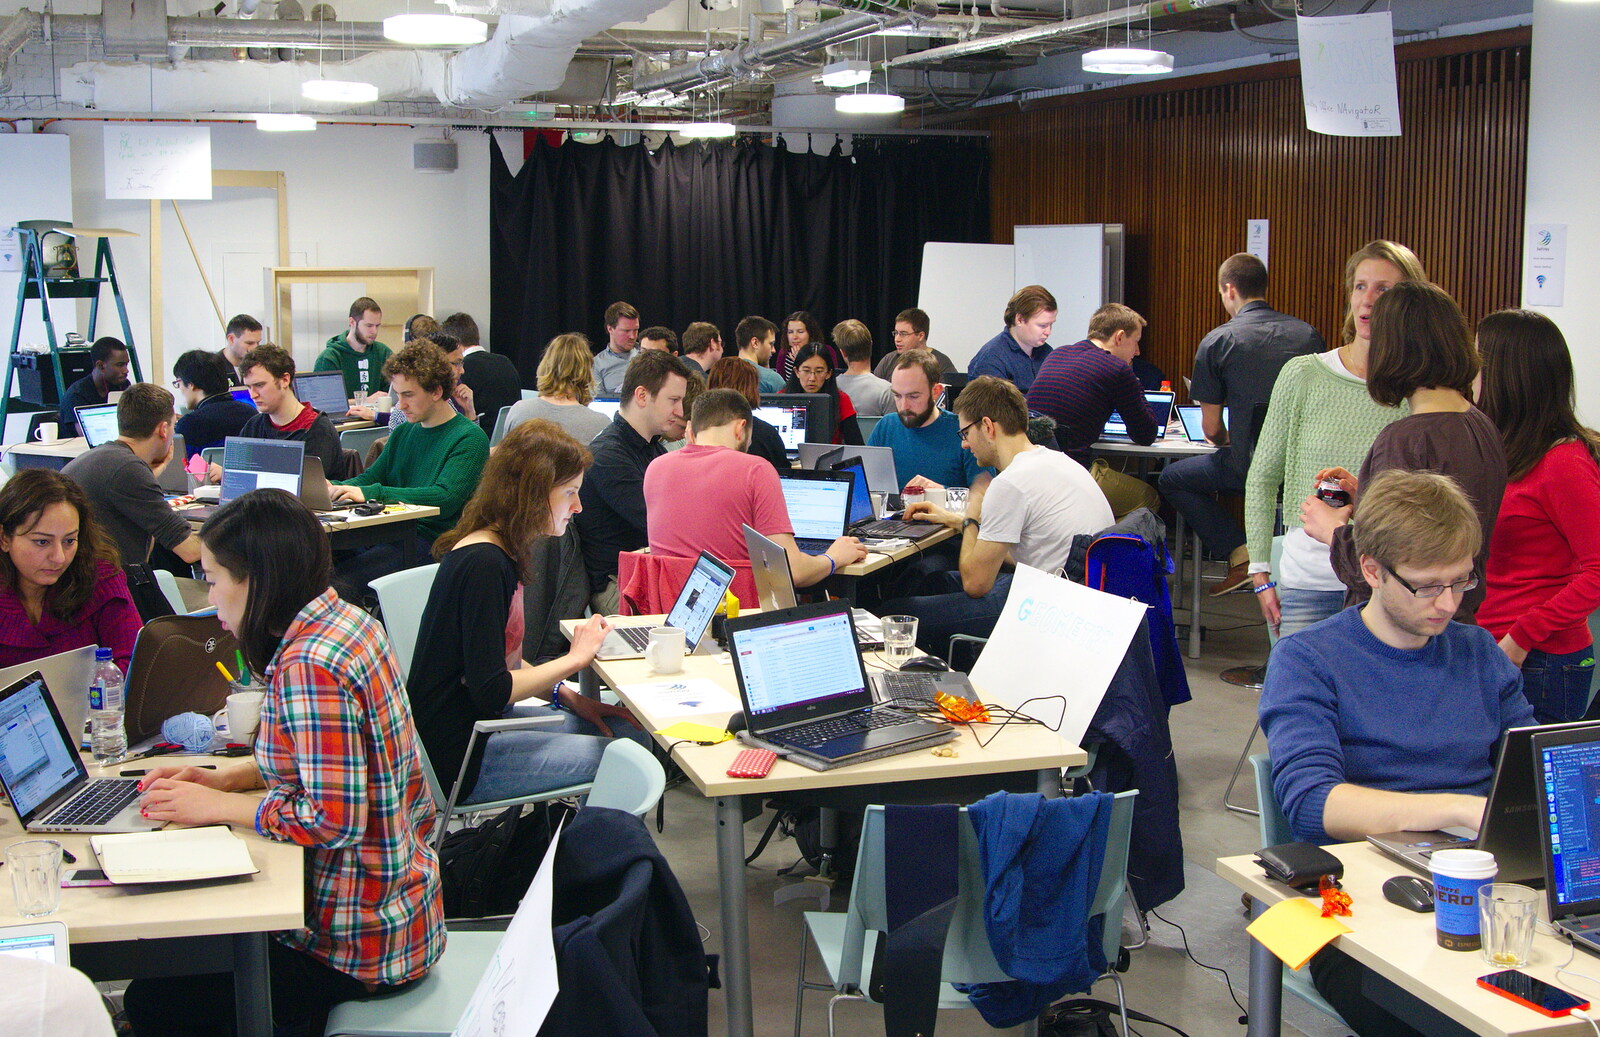 More SwiftKey hacking from SwiftKey Innovation, The Hub, Westminster, London - 21st February 2014